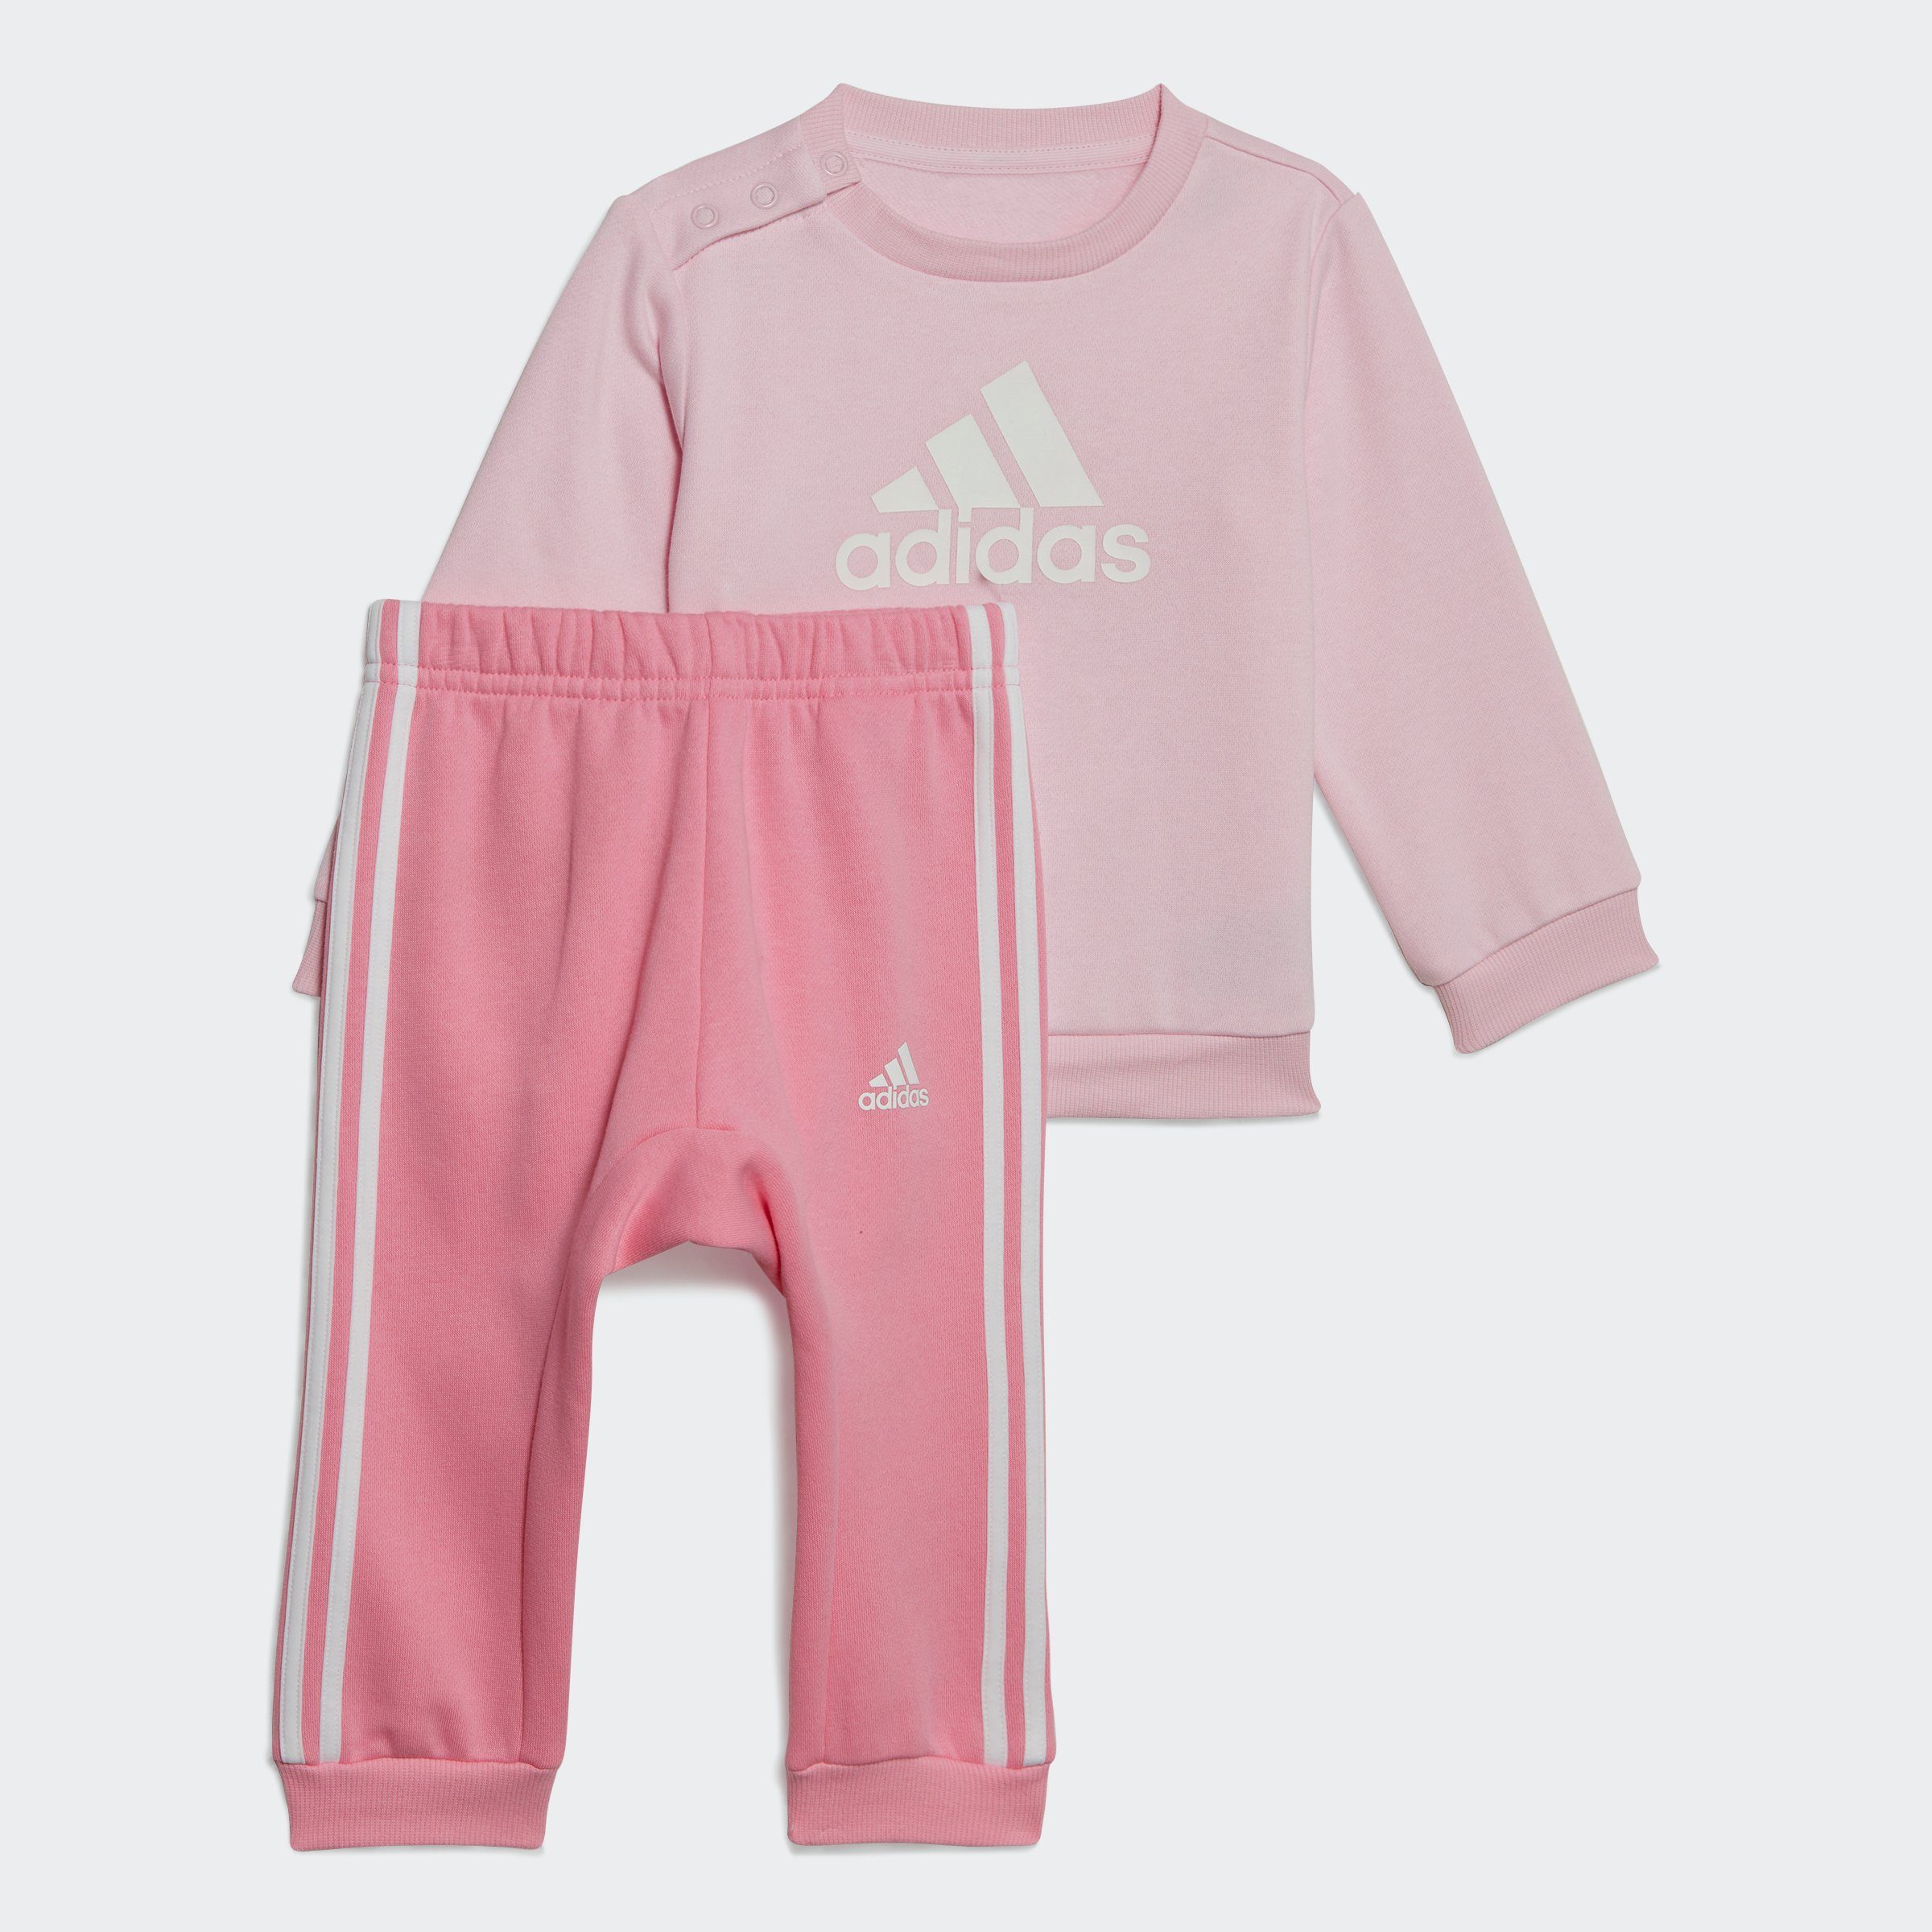 adidas Baby Sportbekleidung online kaufen | OTTO